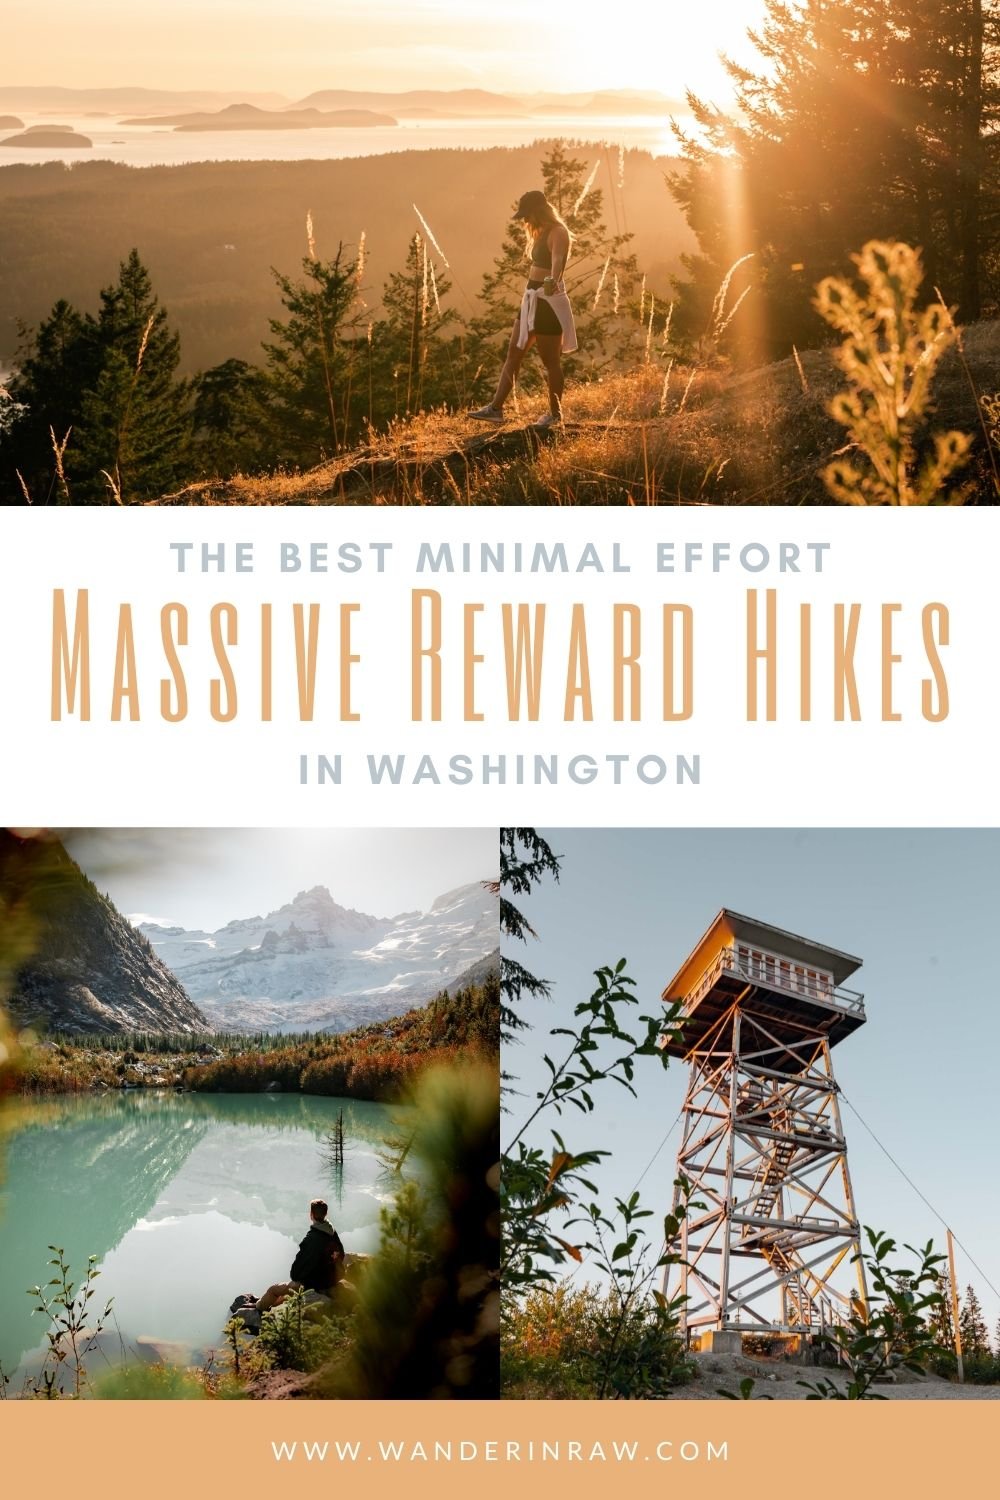 The Best Minimal Effort, Massive Reward Hikes in Washington